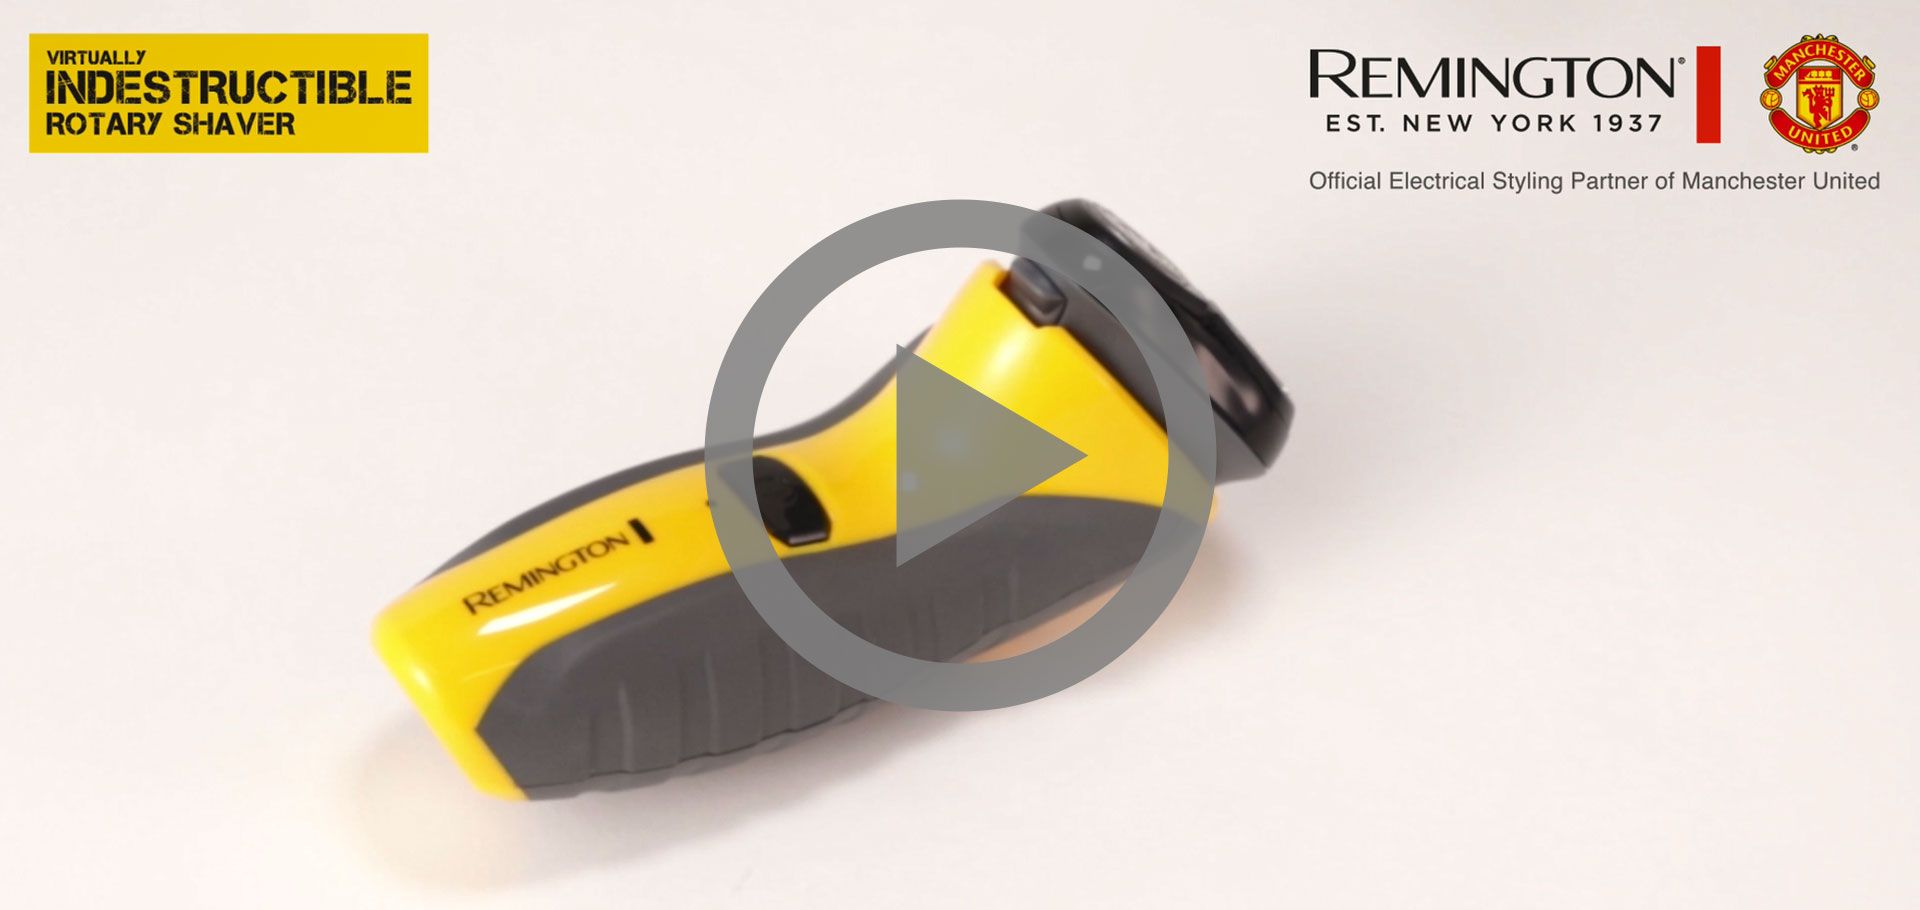 Virtually Indestructible Remington | Rotary